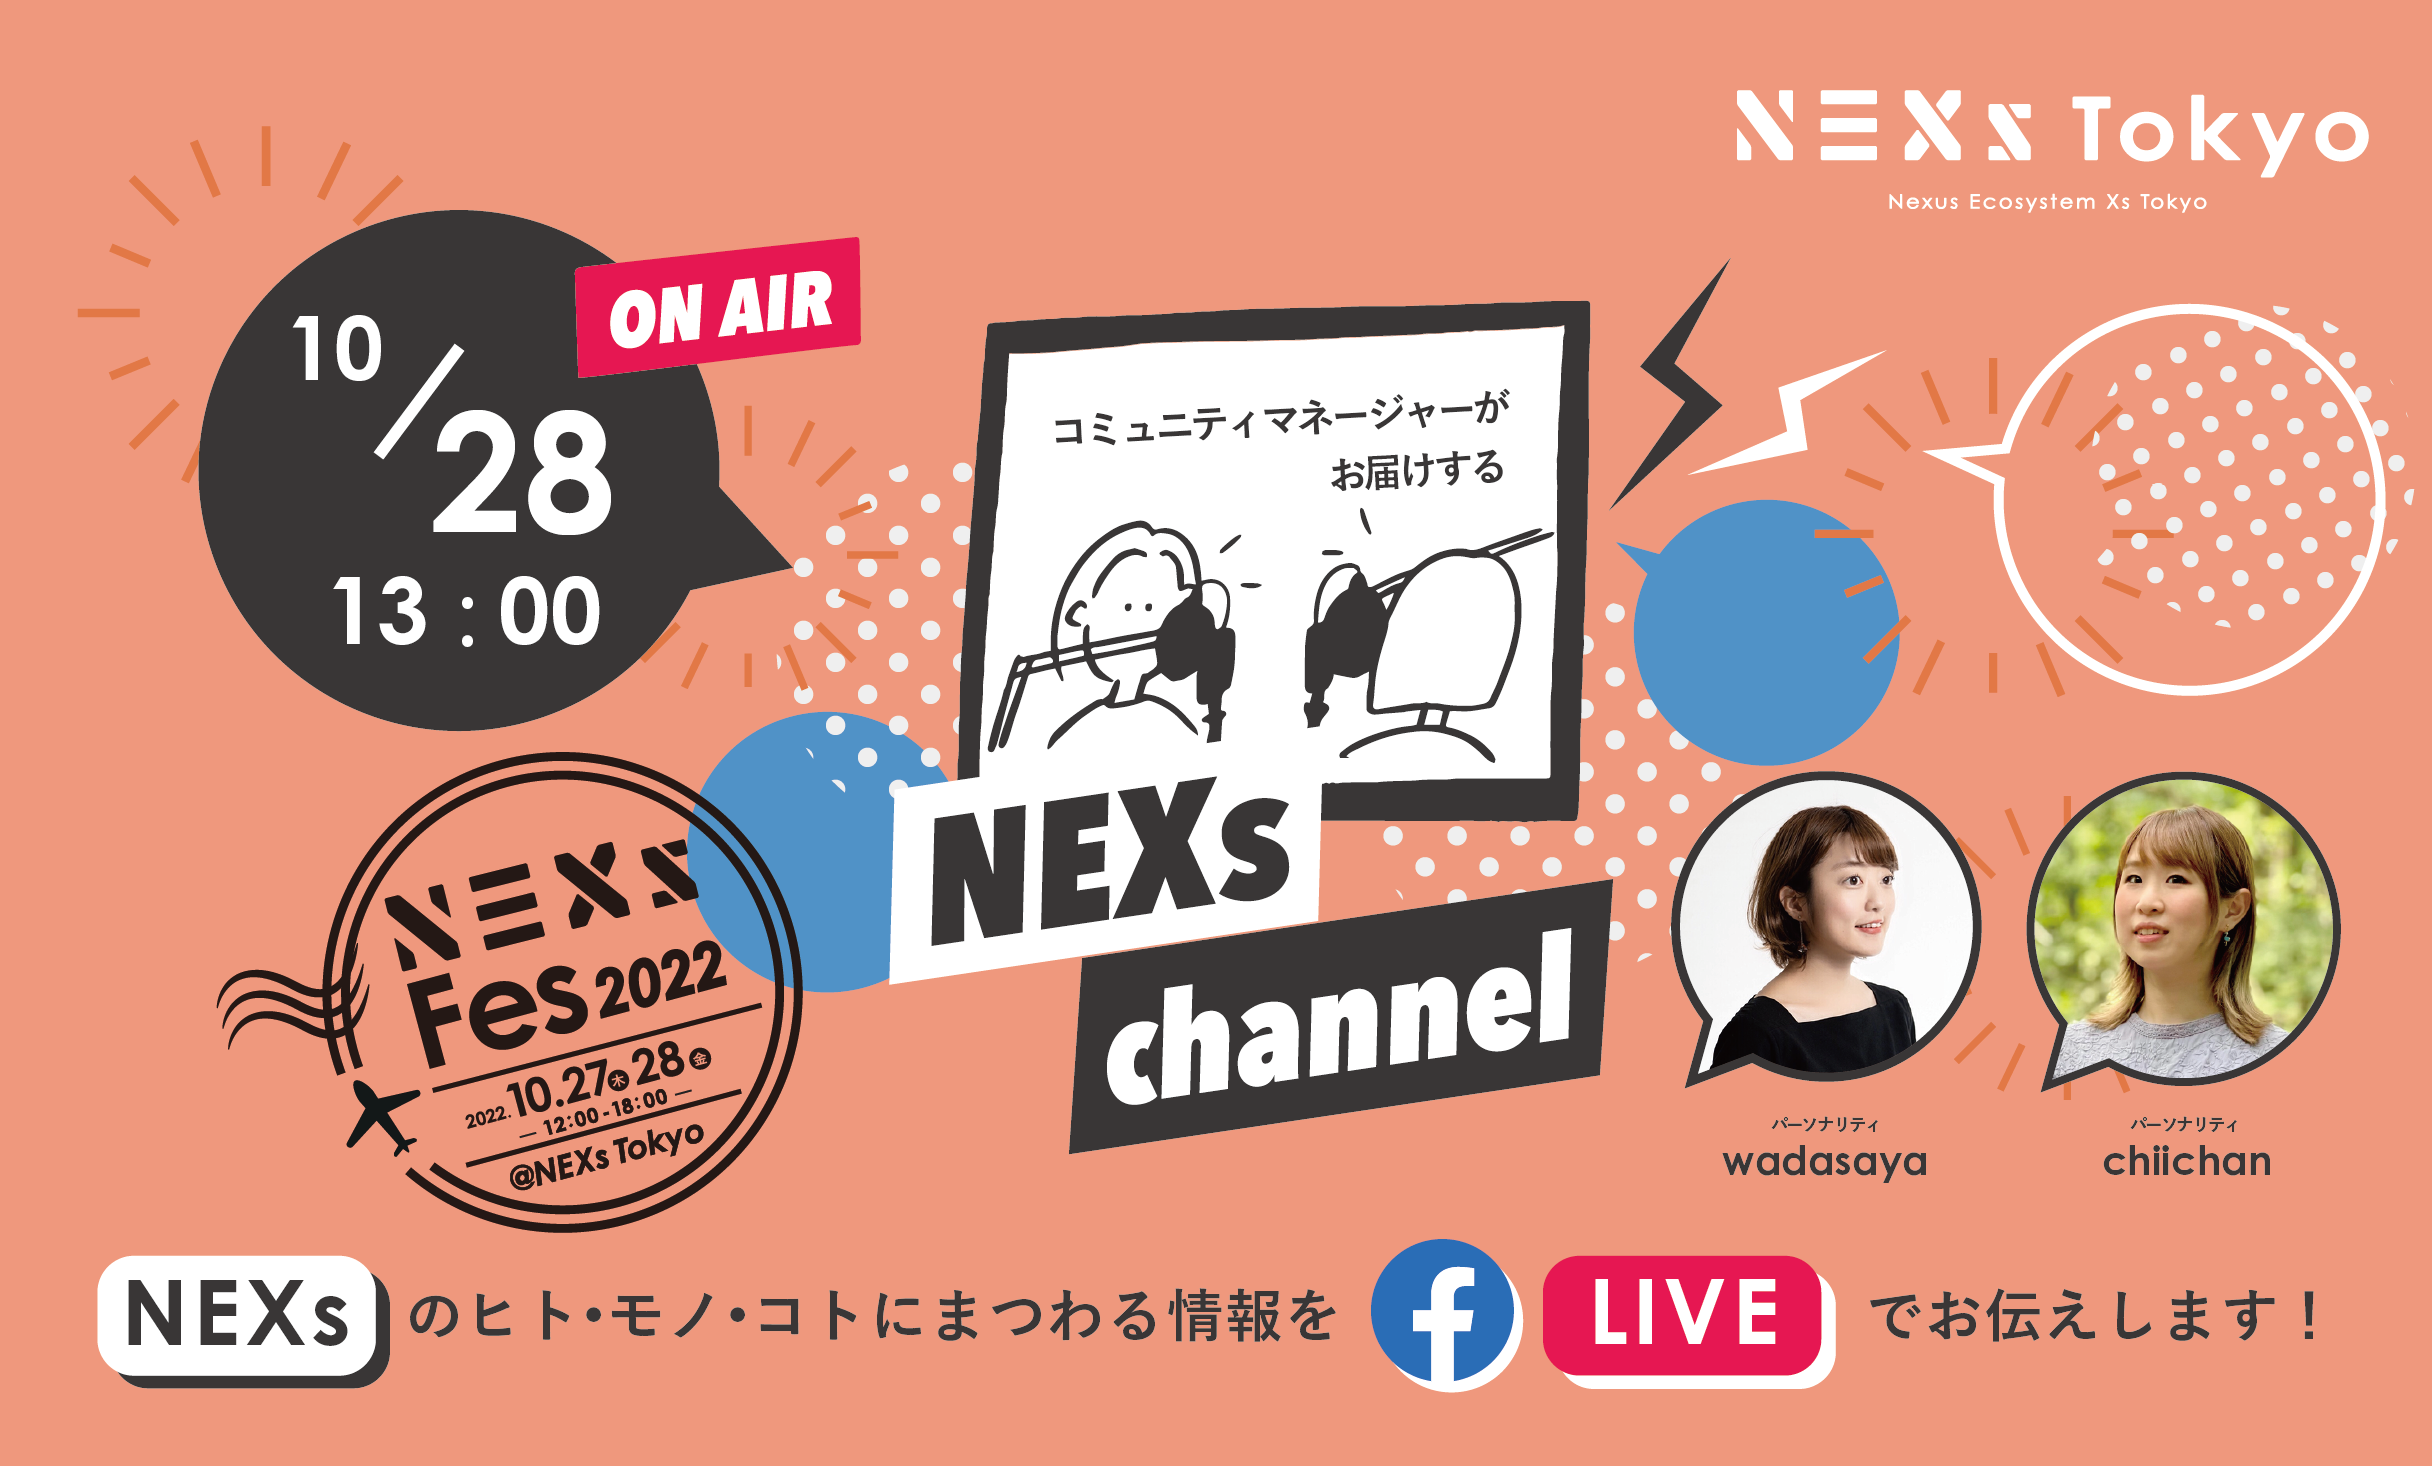 NEXs channel #23 -NEXs Tokyoのヒト・モノ・コトを特設ラジオブースから生放送でお届け！-